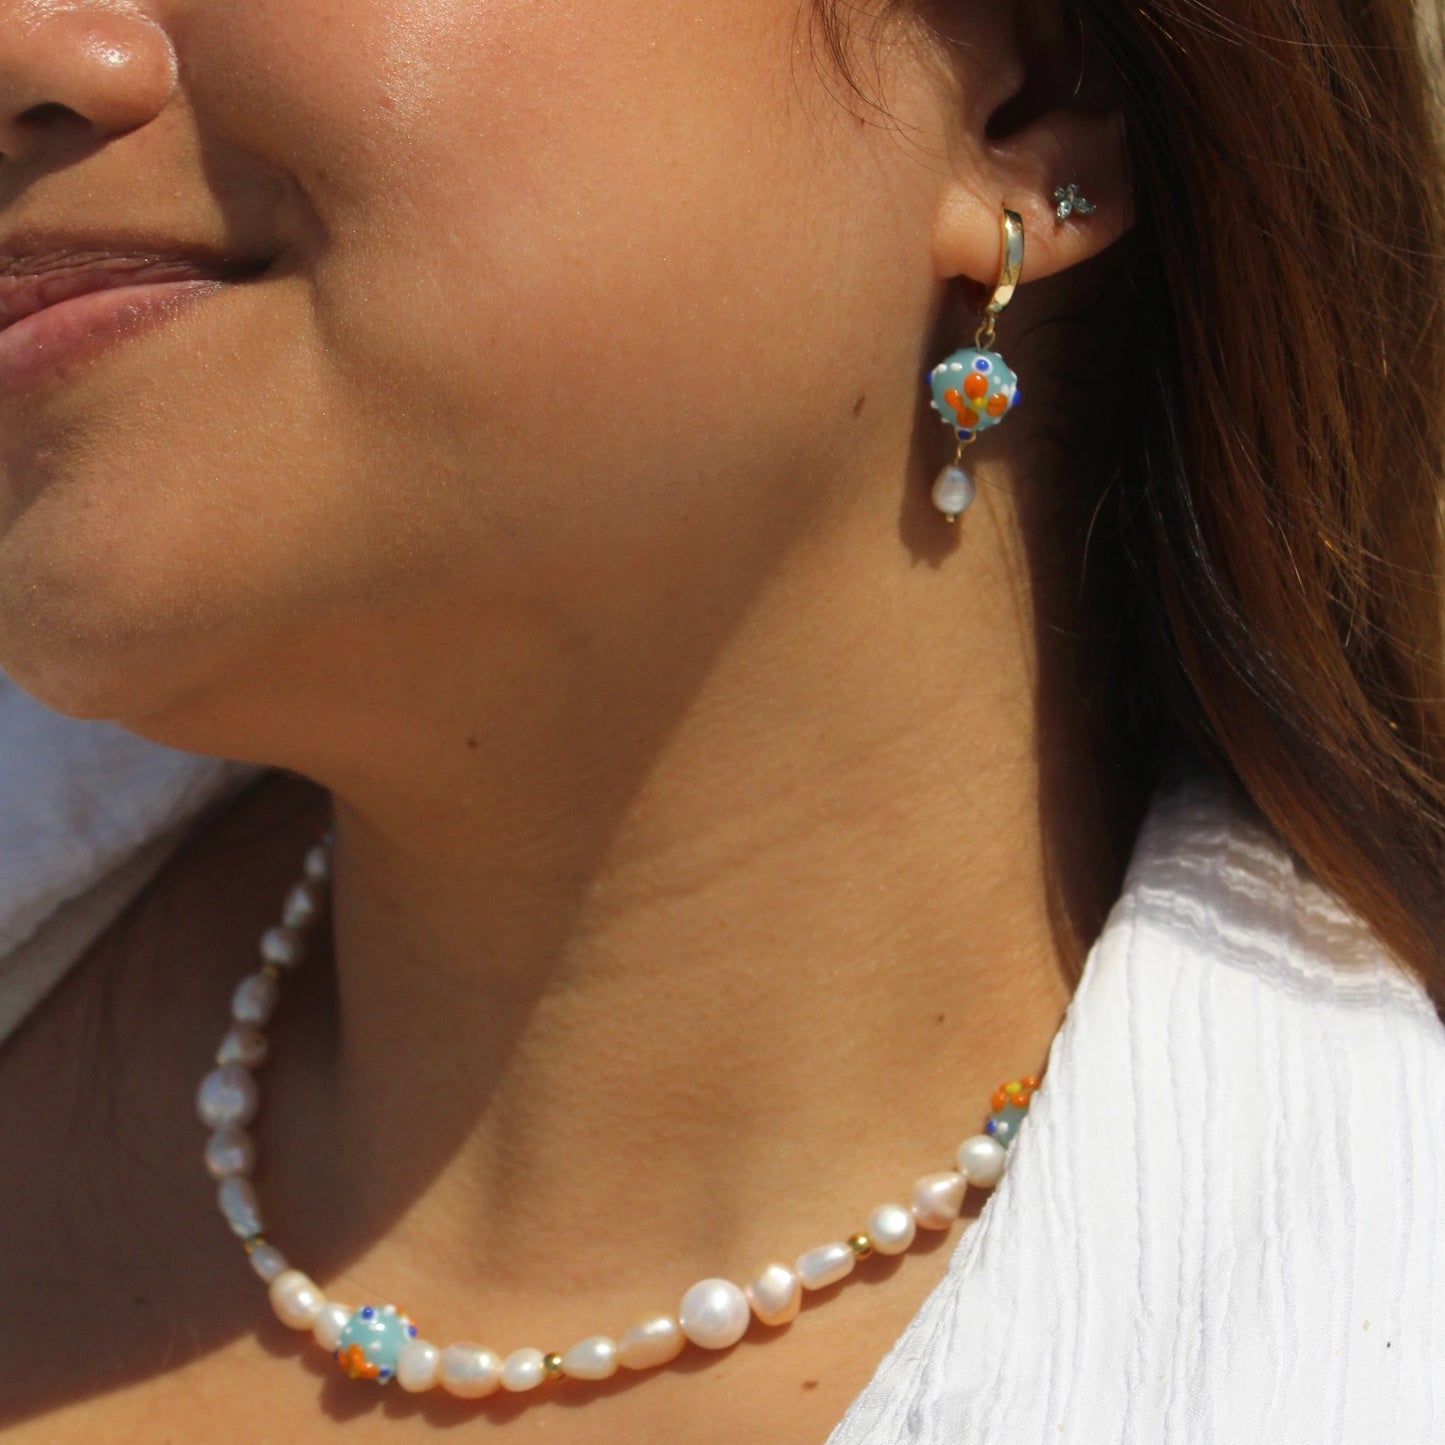 santorini earrings